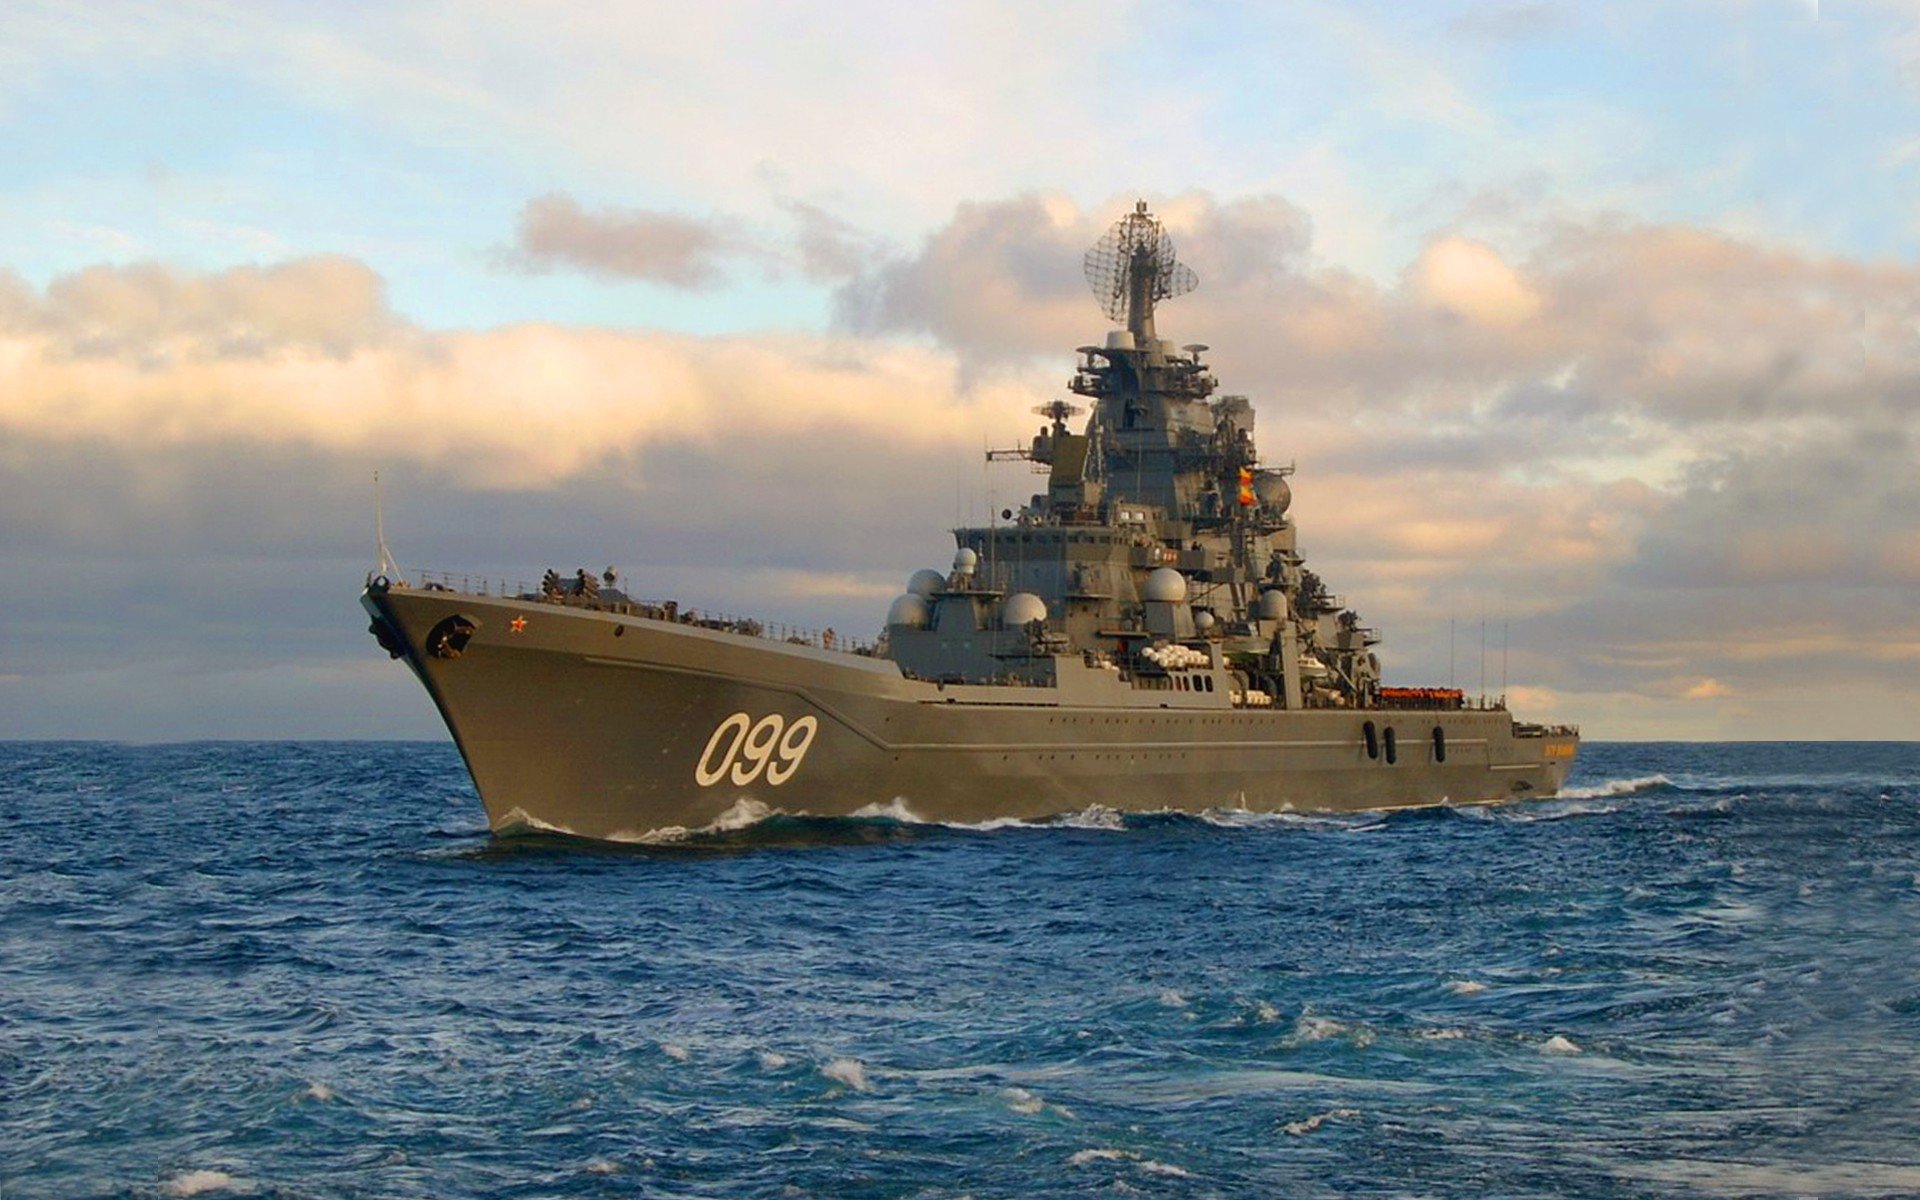 Russian Battlecruiser Petr Velikiy Full HD Wallpaper And Background Image X ID